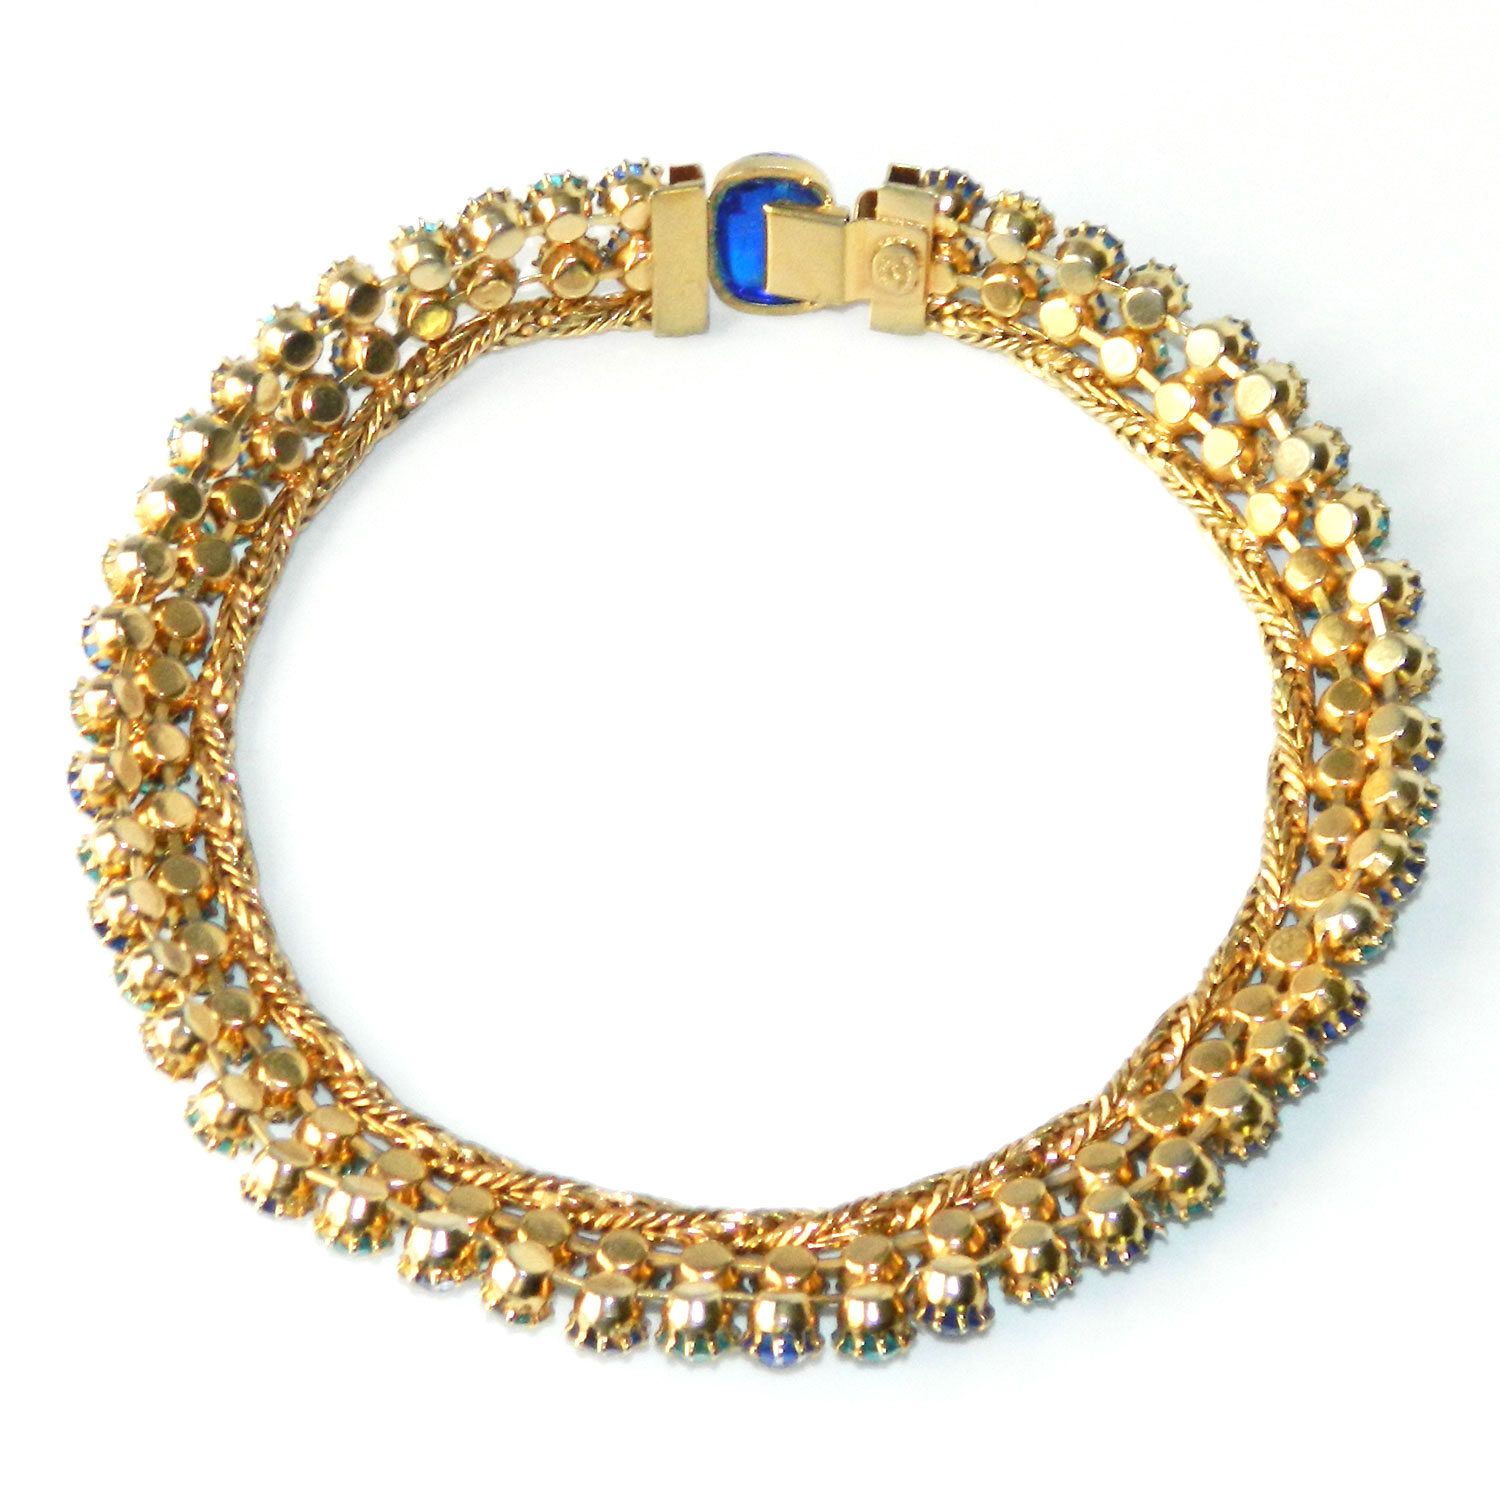 1950's Hattie Carnegie necklace